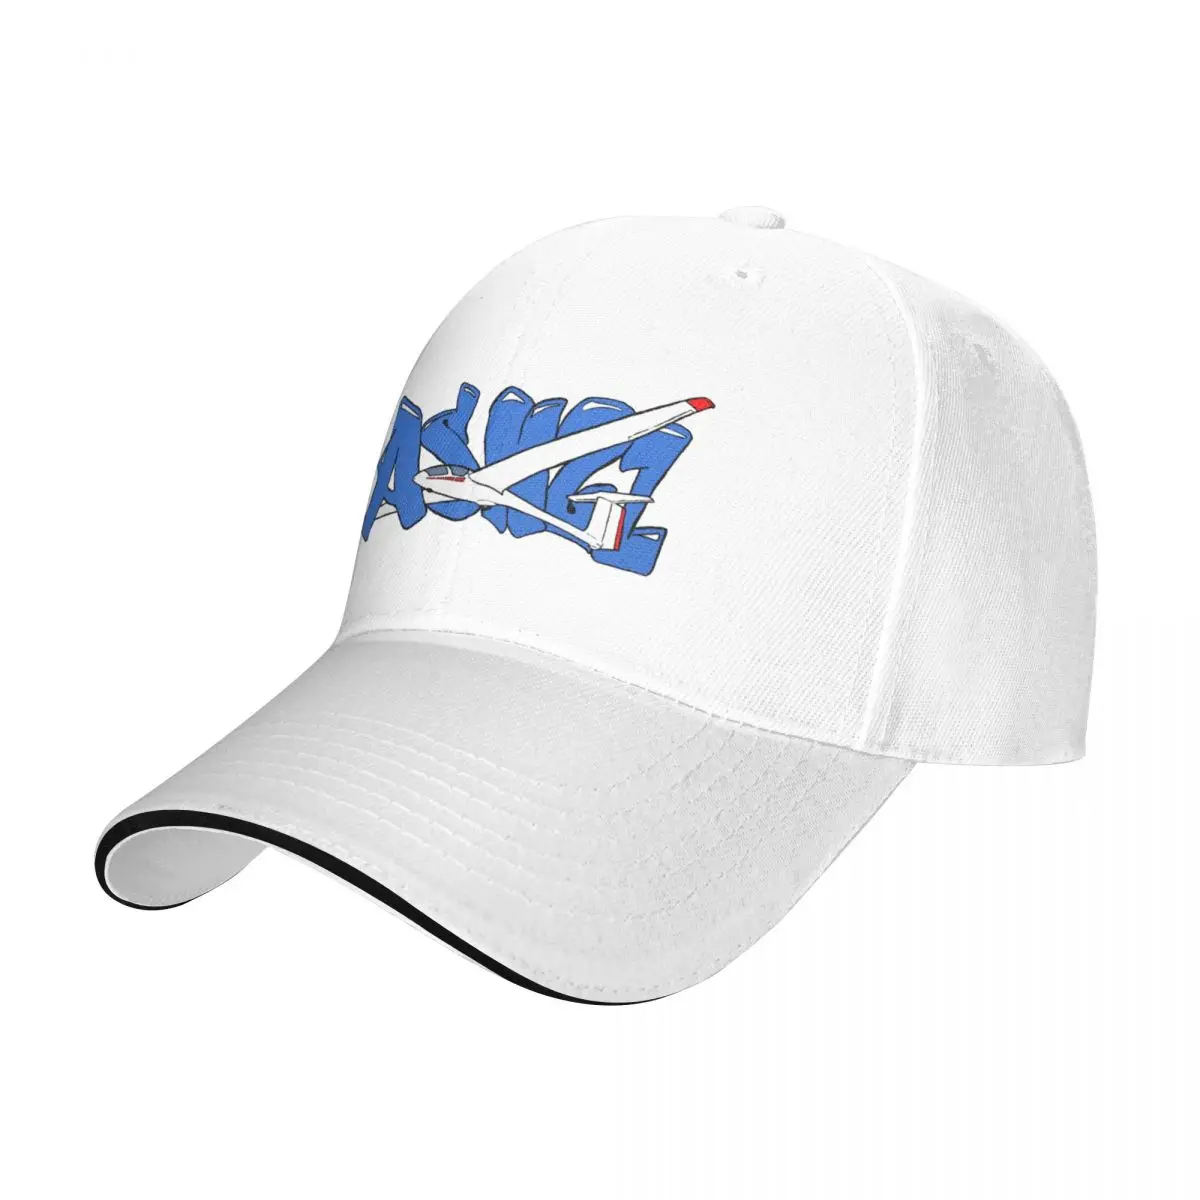 ASK21 כובע בייסבול Uv הגנה סולארית כובע החוף טיול כובע החוף הצמד חזרה כובע כובע לנשים גברים התמונה 1